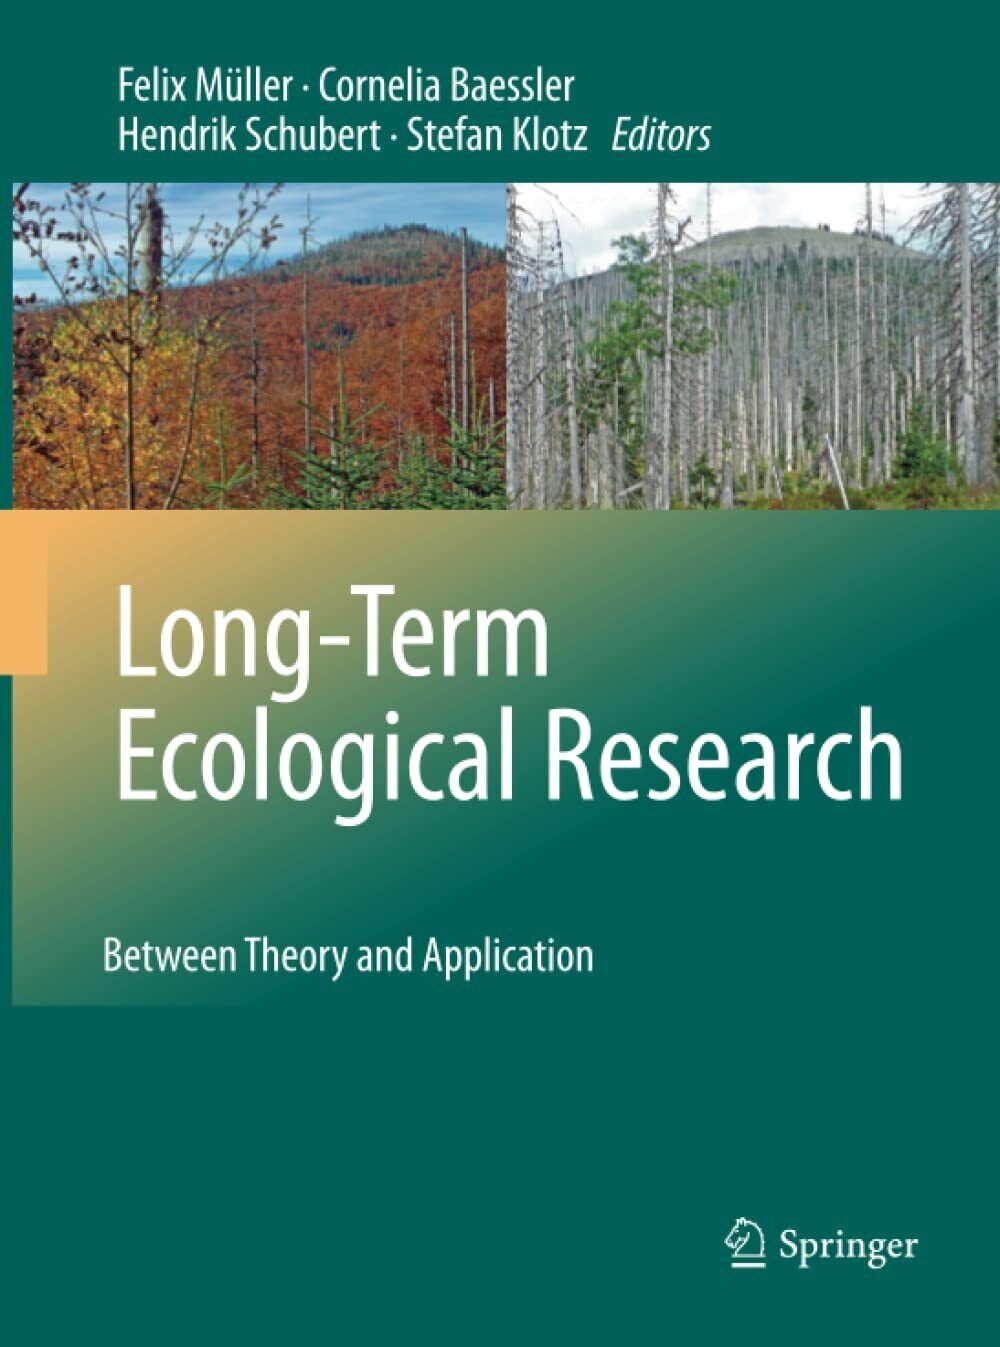 Long-Term Ecological Research - Felix M?ller - Springer, 2014